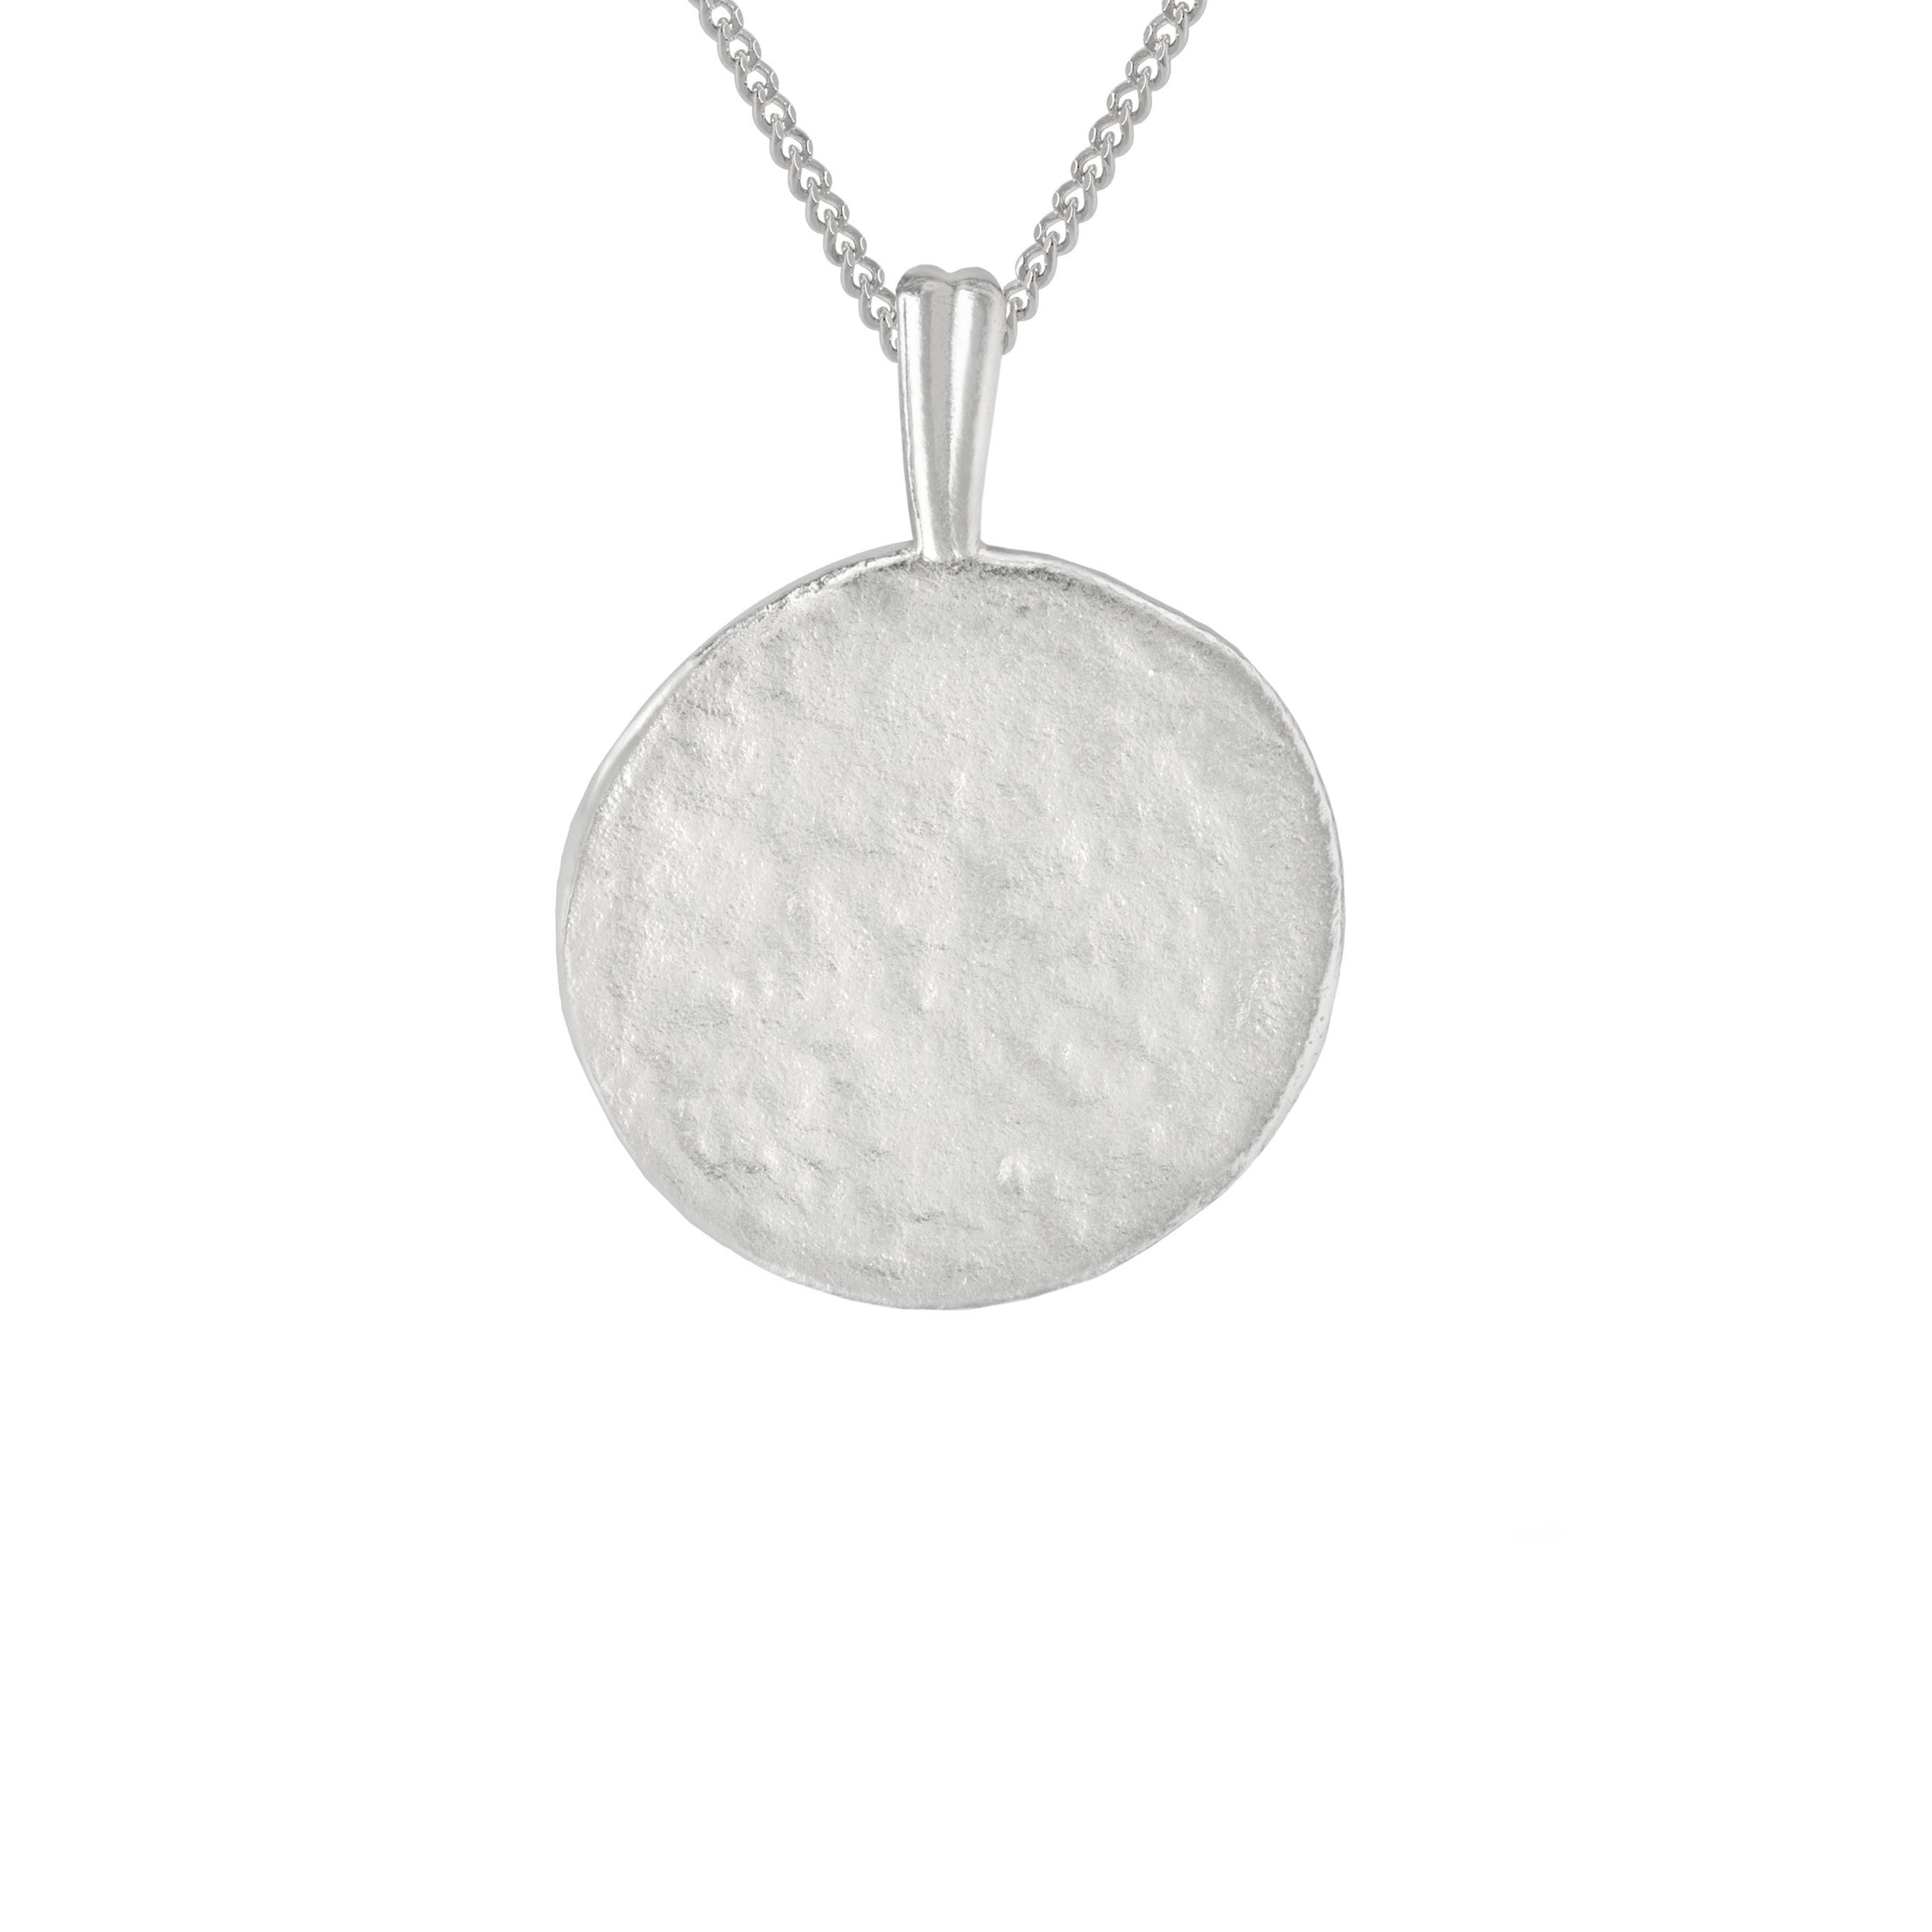 Pisces Zodiac Pendant Necklace in Silver back of pendant